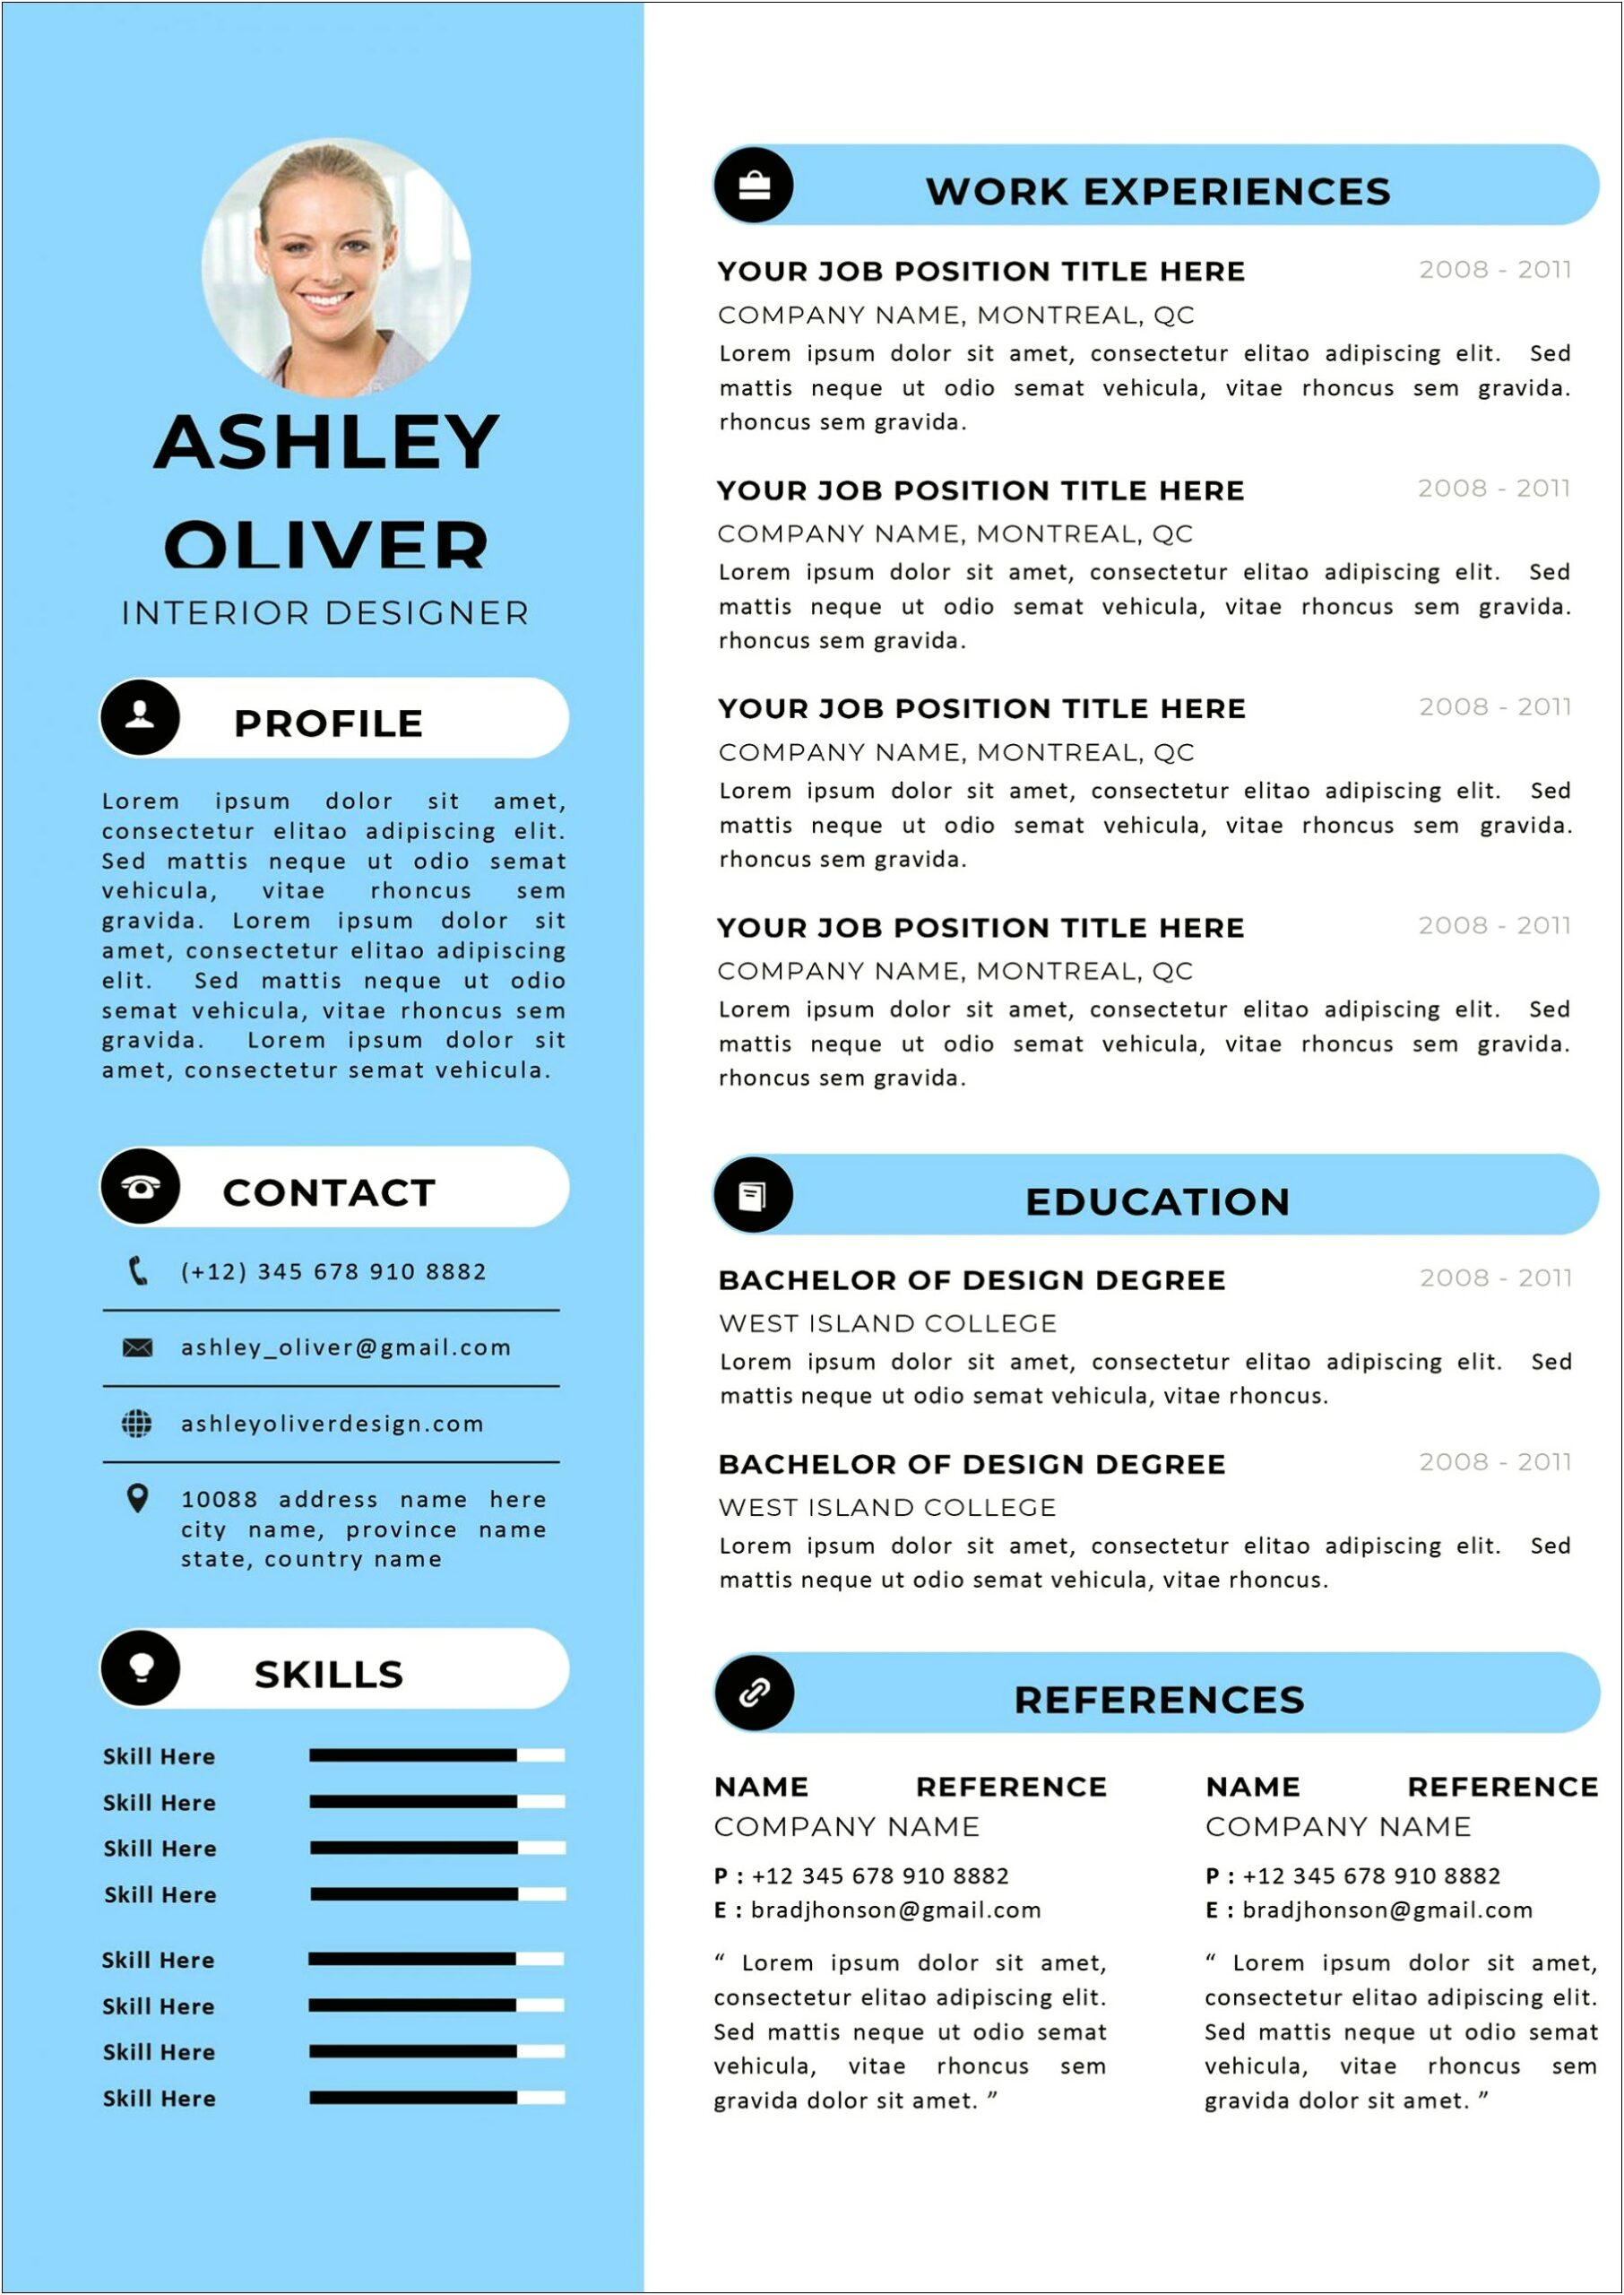 Interior Designer Job Description Resume